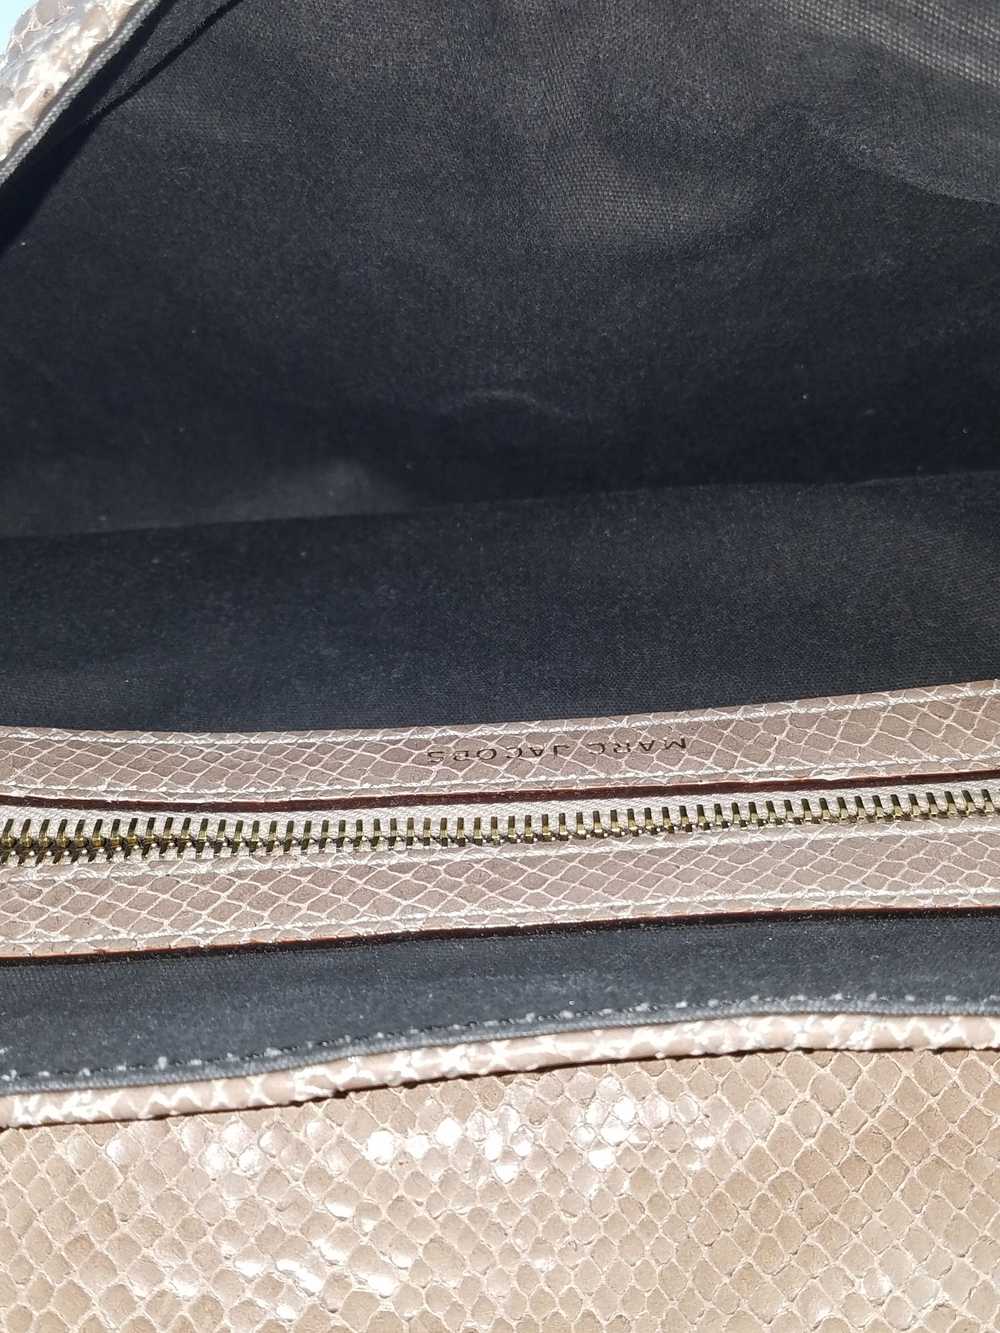 Authentic Marc Jacobs Snakeskin Taupe Shoulder Bag - image 4